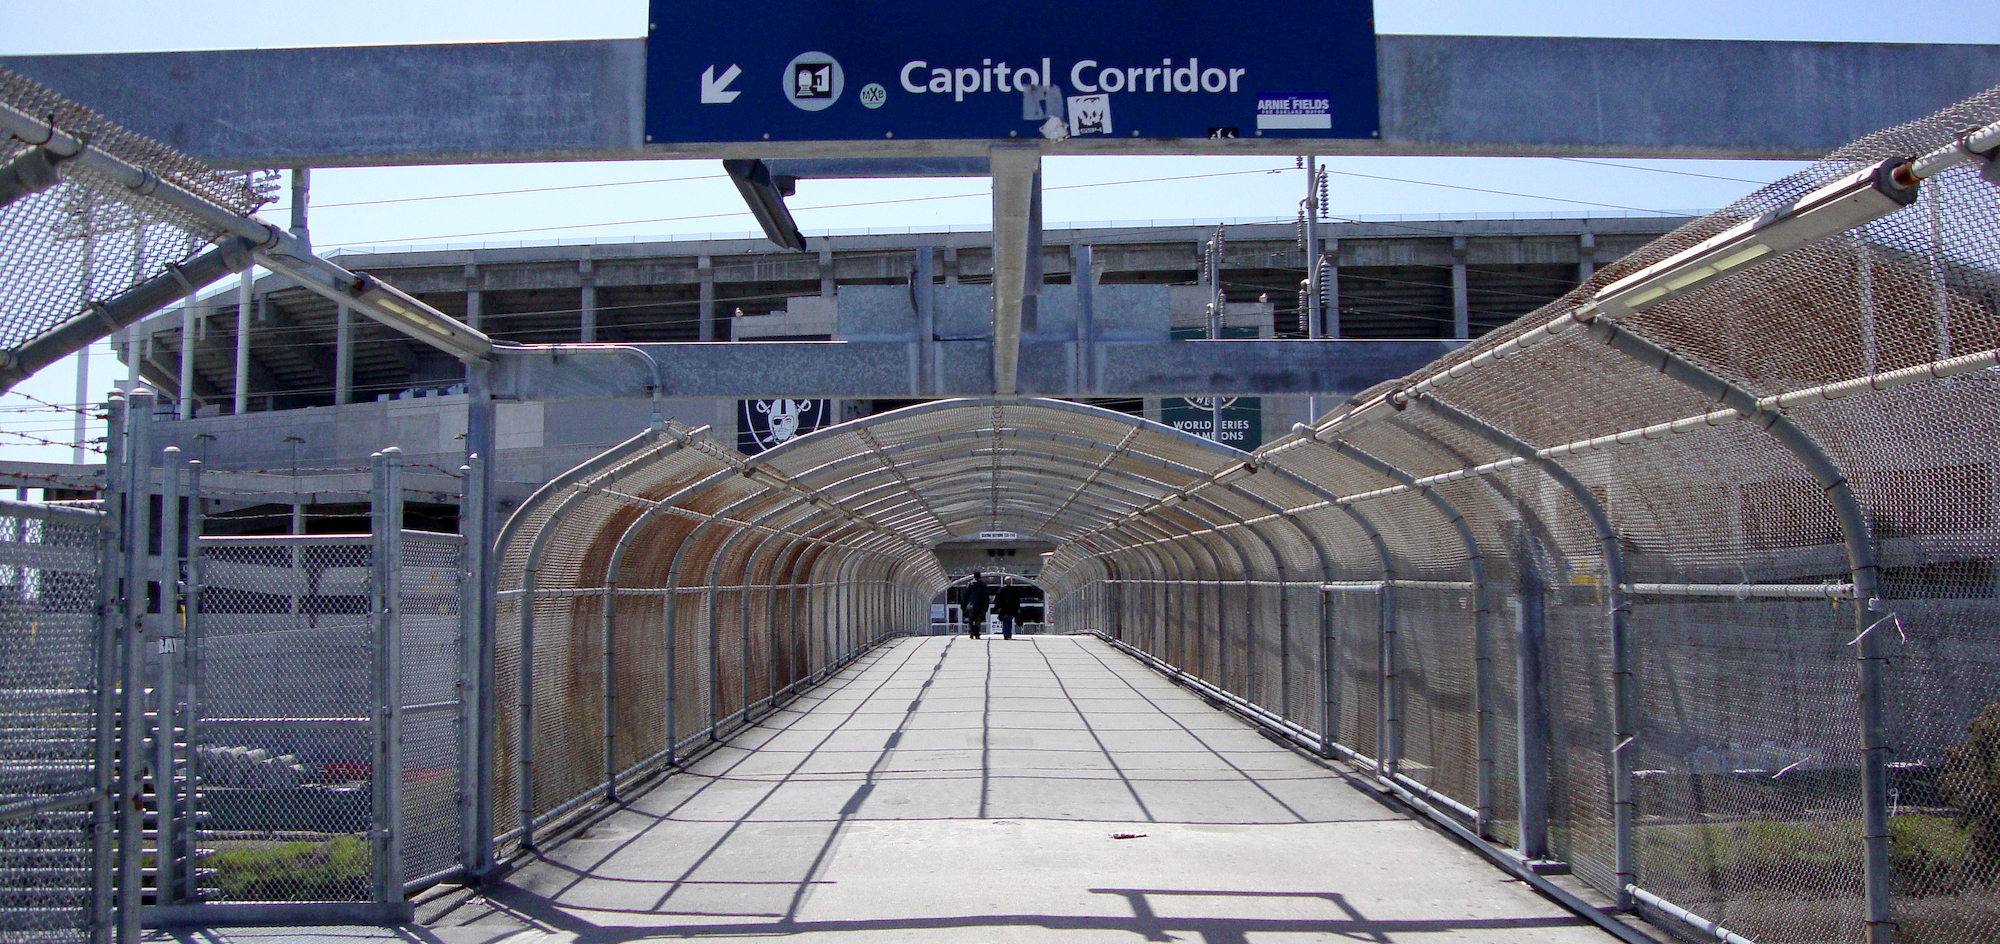 Walkway leading to Capitol Corridor trains 